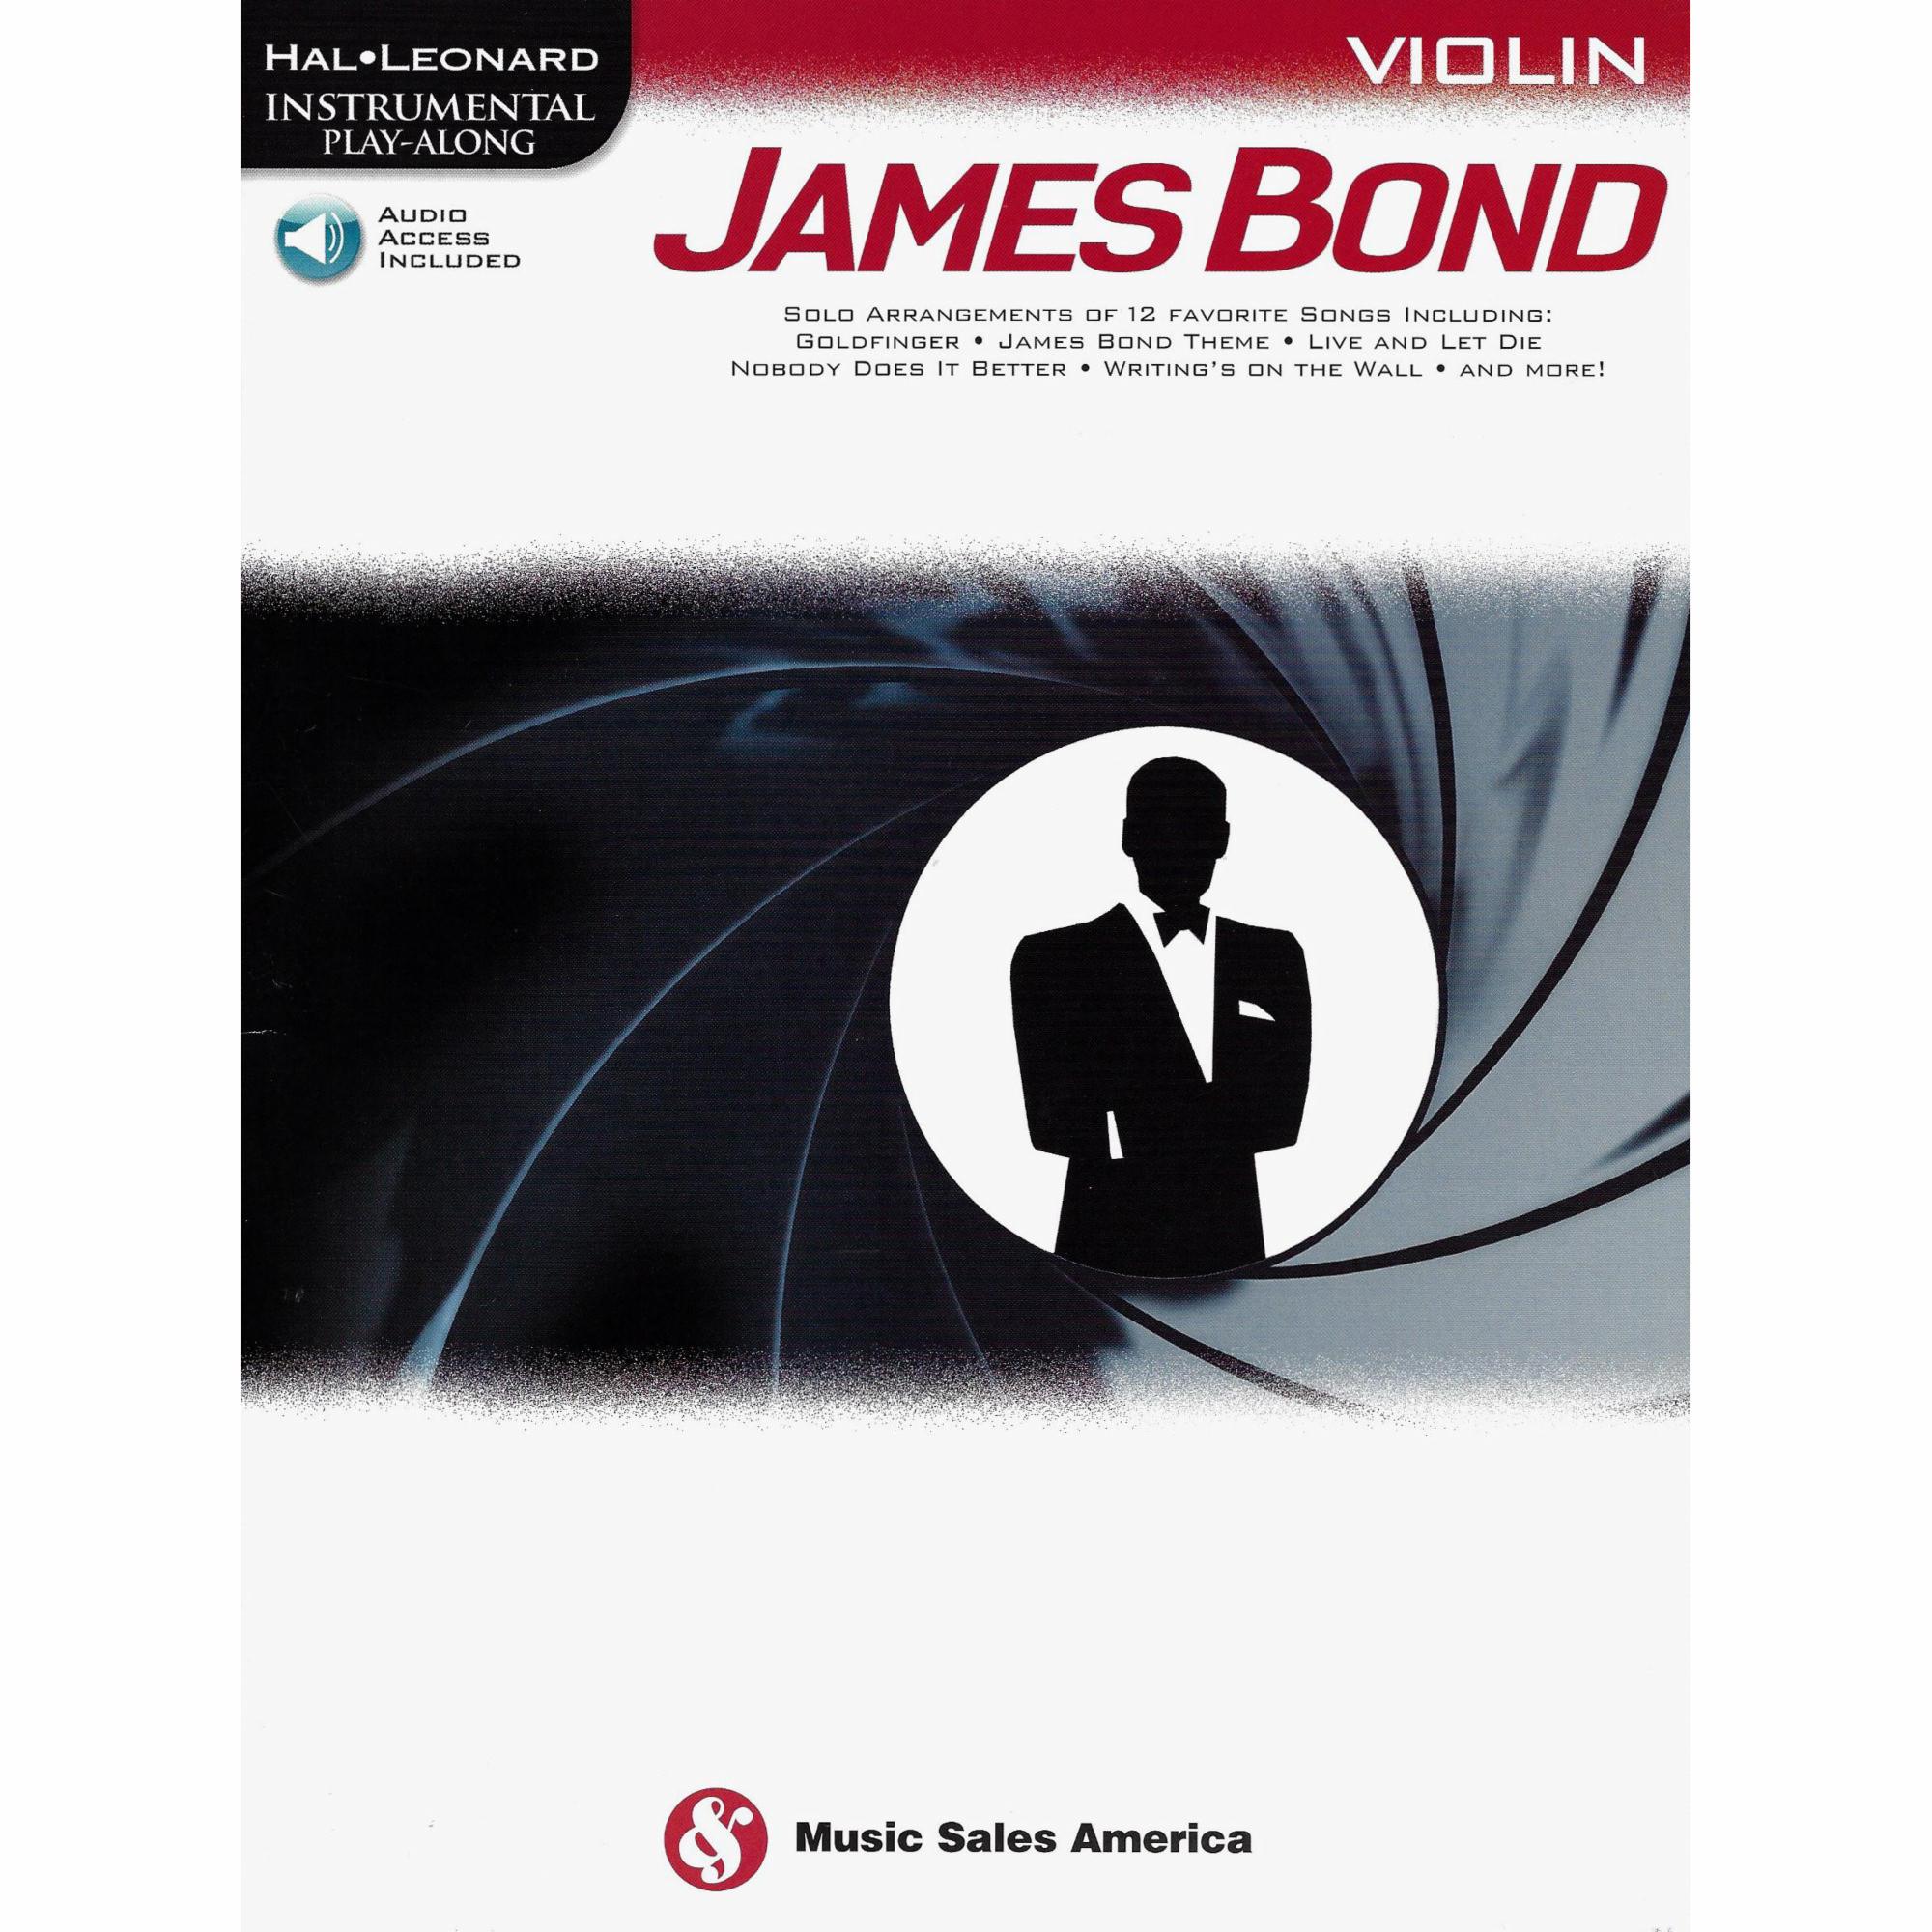 James Bond for Violin, Viola, or Cello